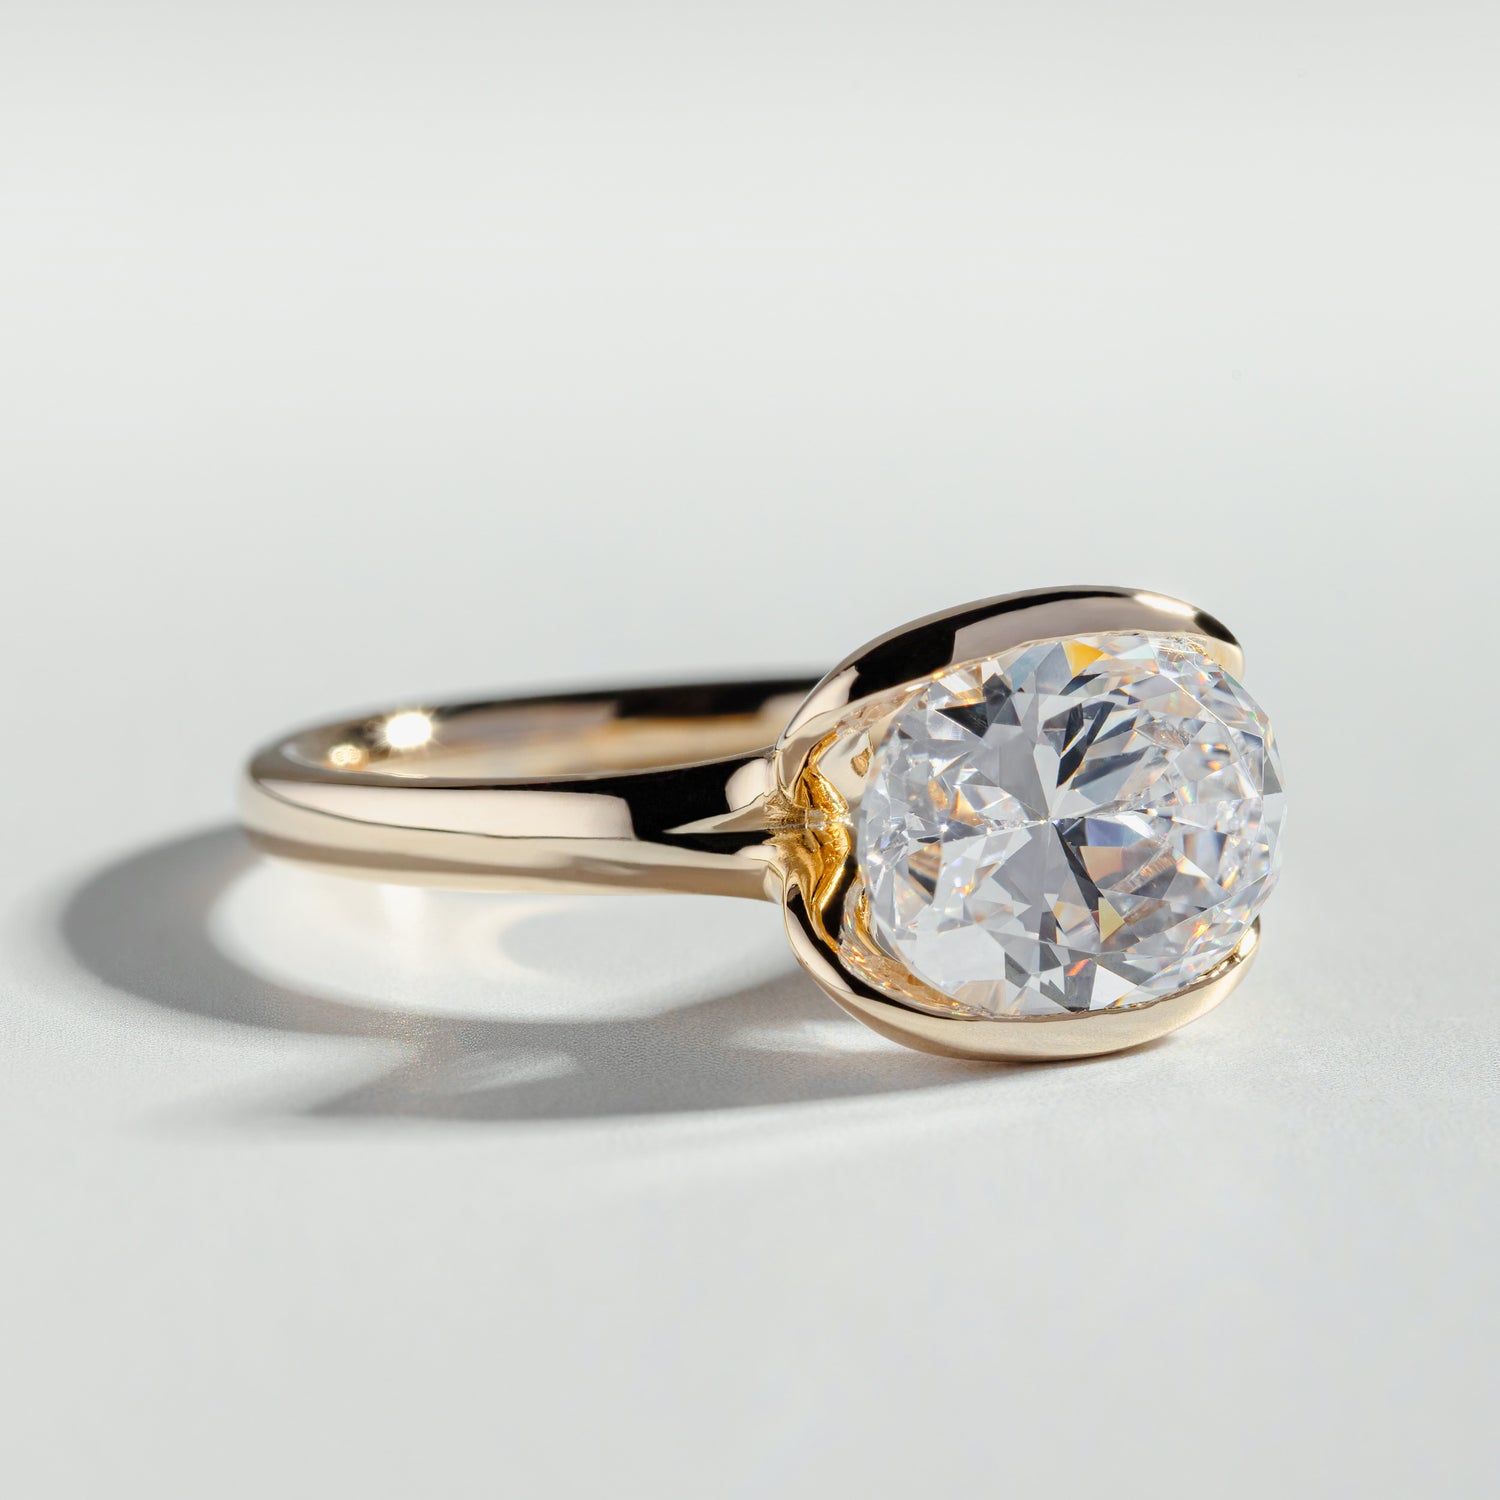 The Oval Cut Half Bezel Diamond Ring